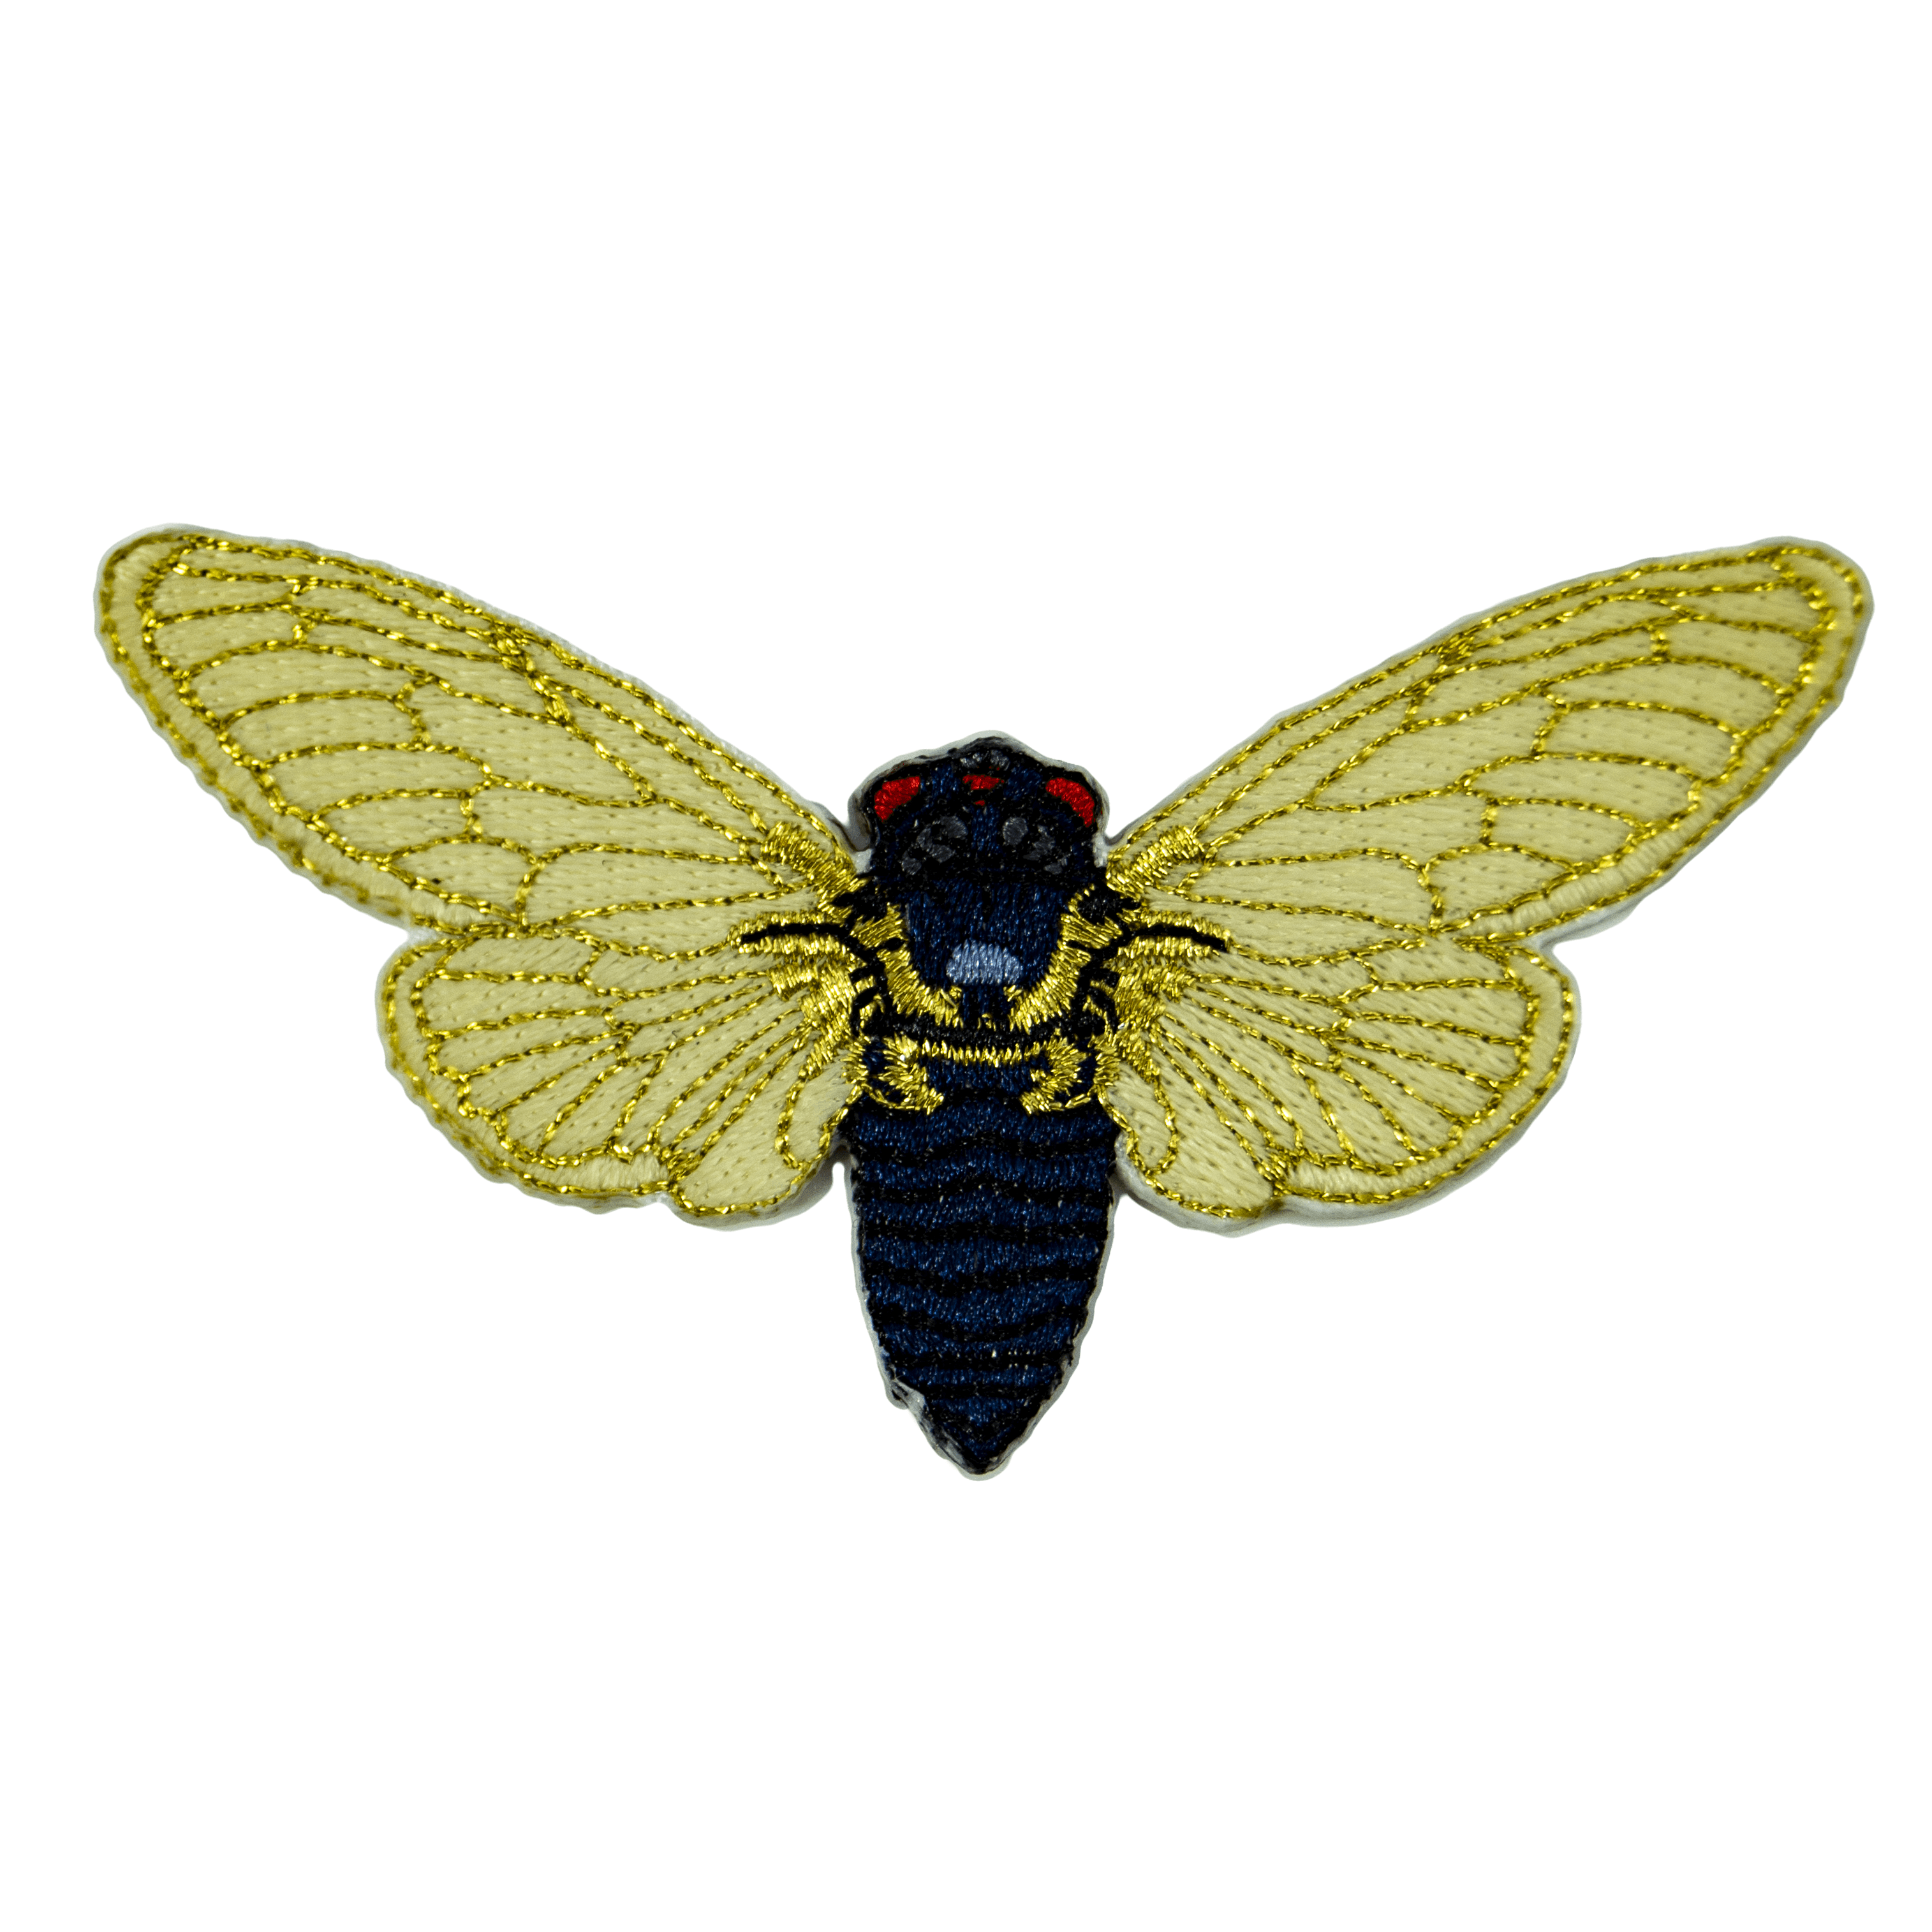 June 2021 Bug Box (Periodical Cicada)